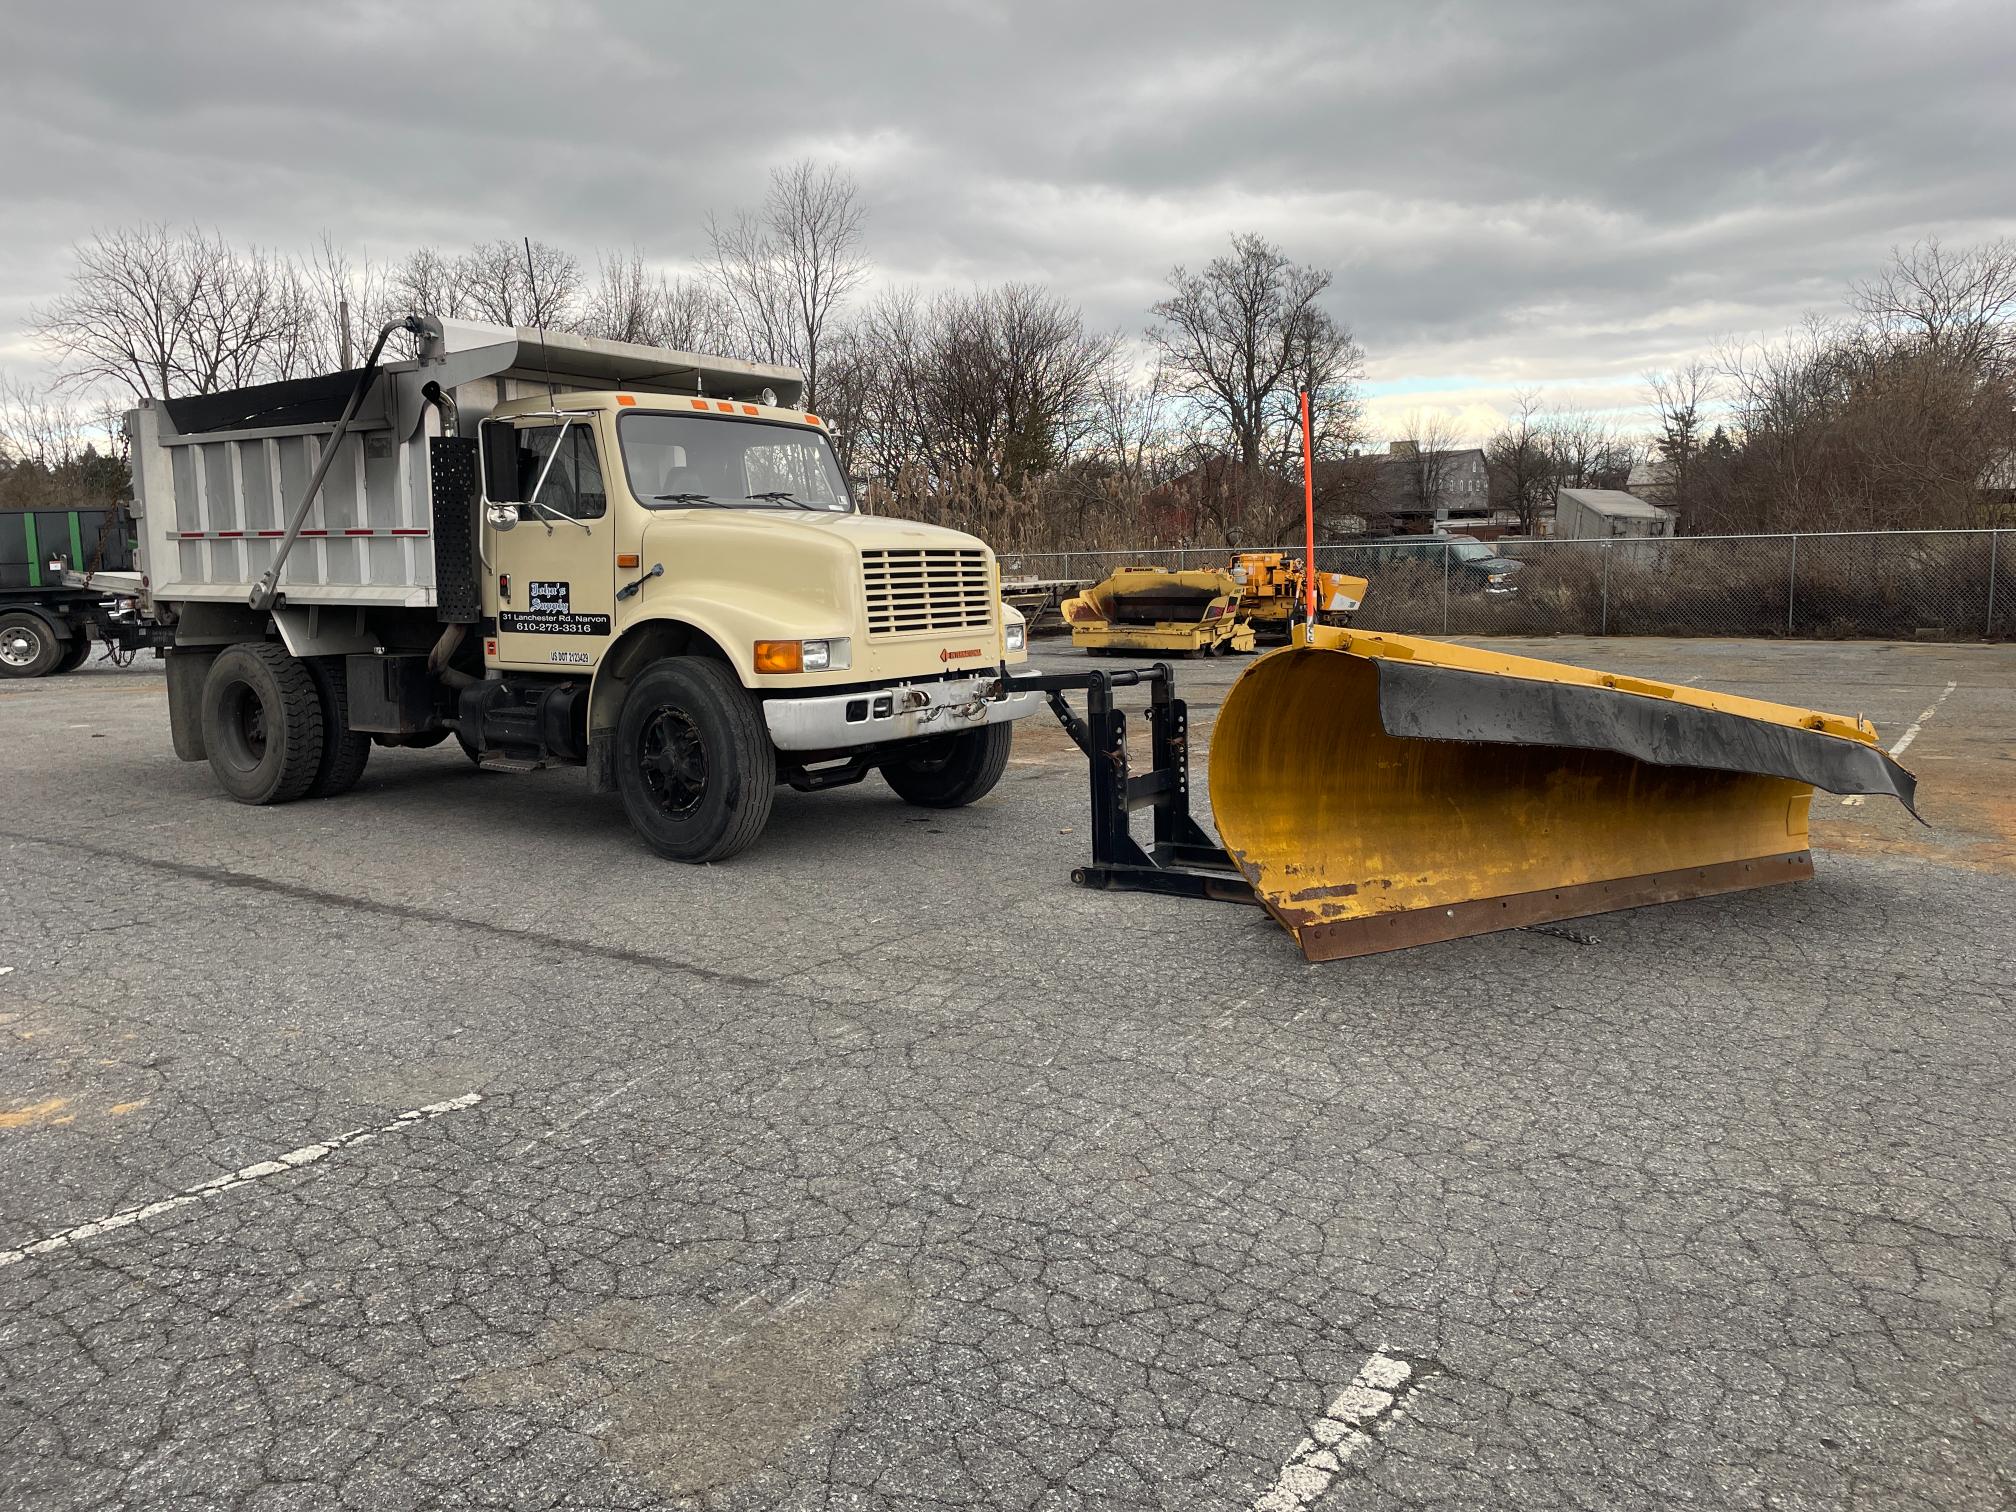 1990 International 4900 4X2 Dump Truck W/ Plow